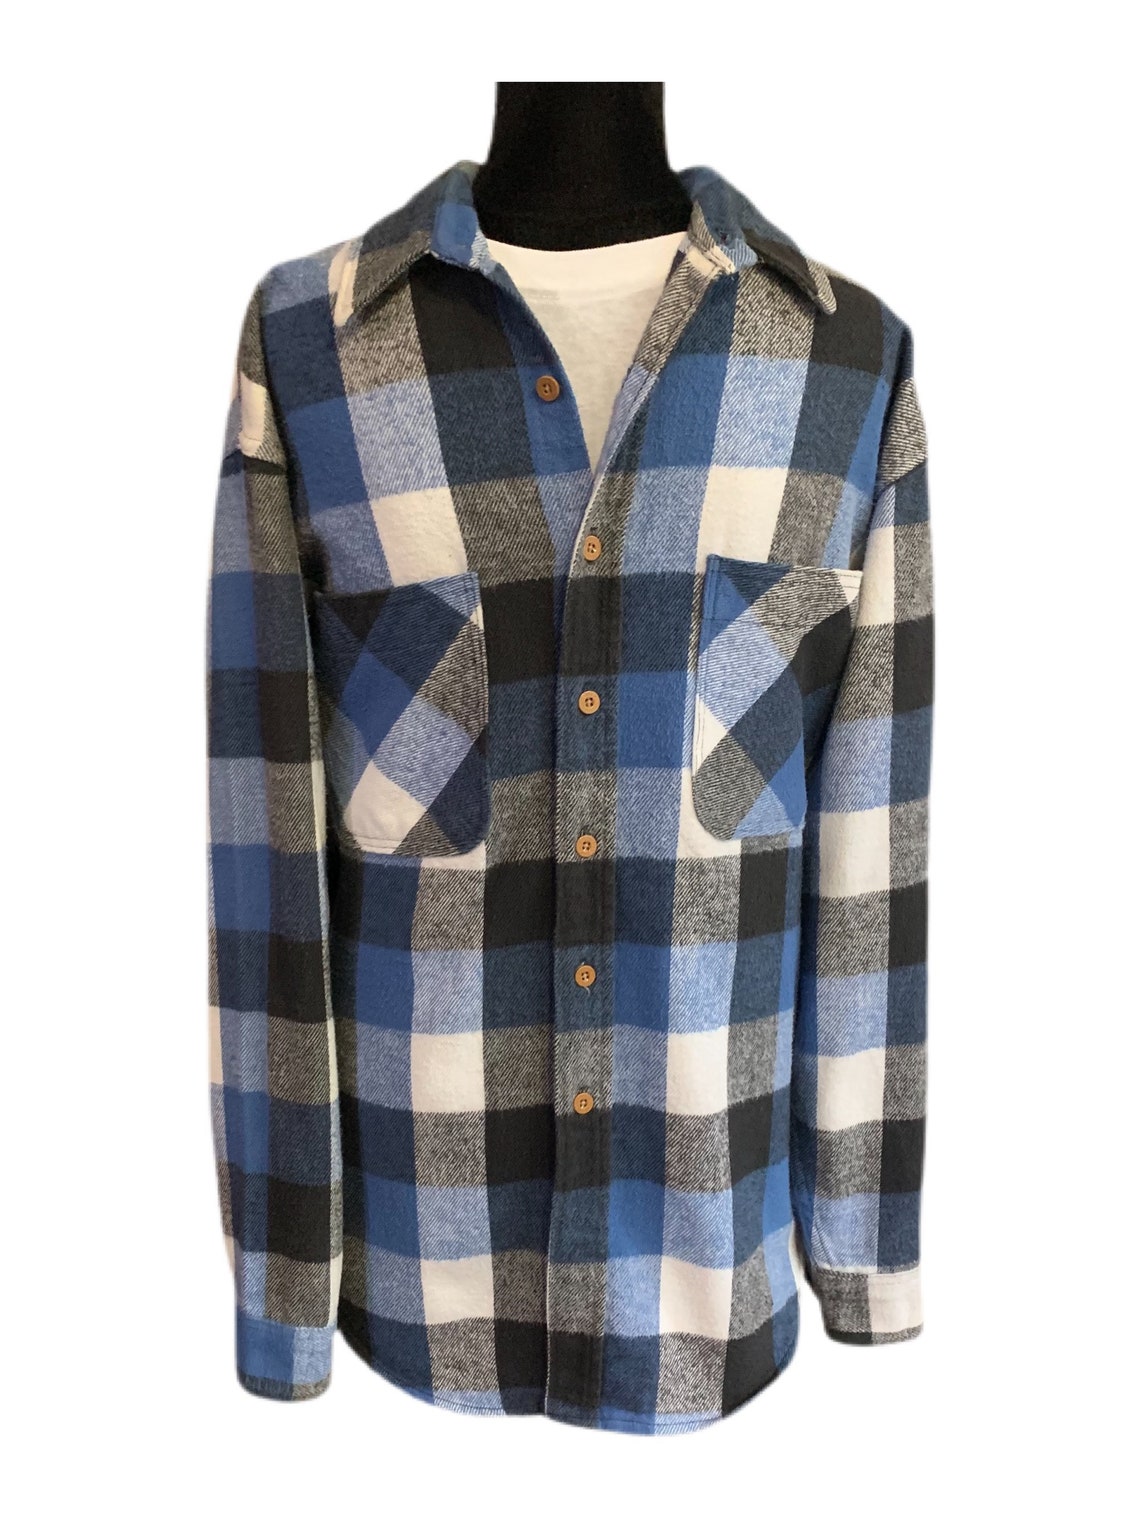 Big Mac JCPenney Flannel Shirt 80s Vintage Plaid Flannel Work | Etsy